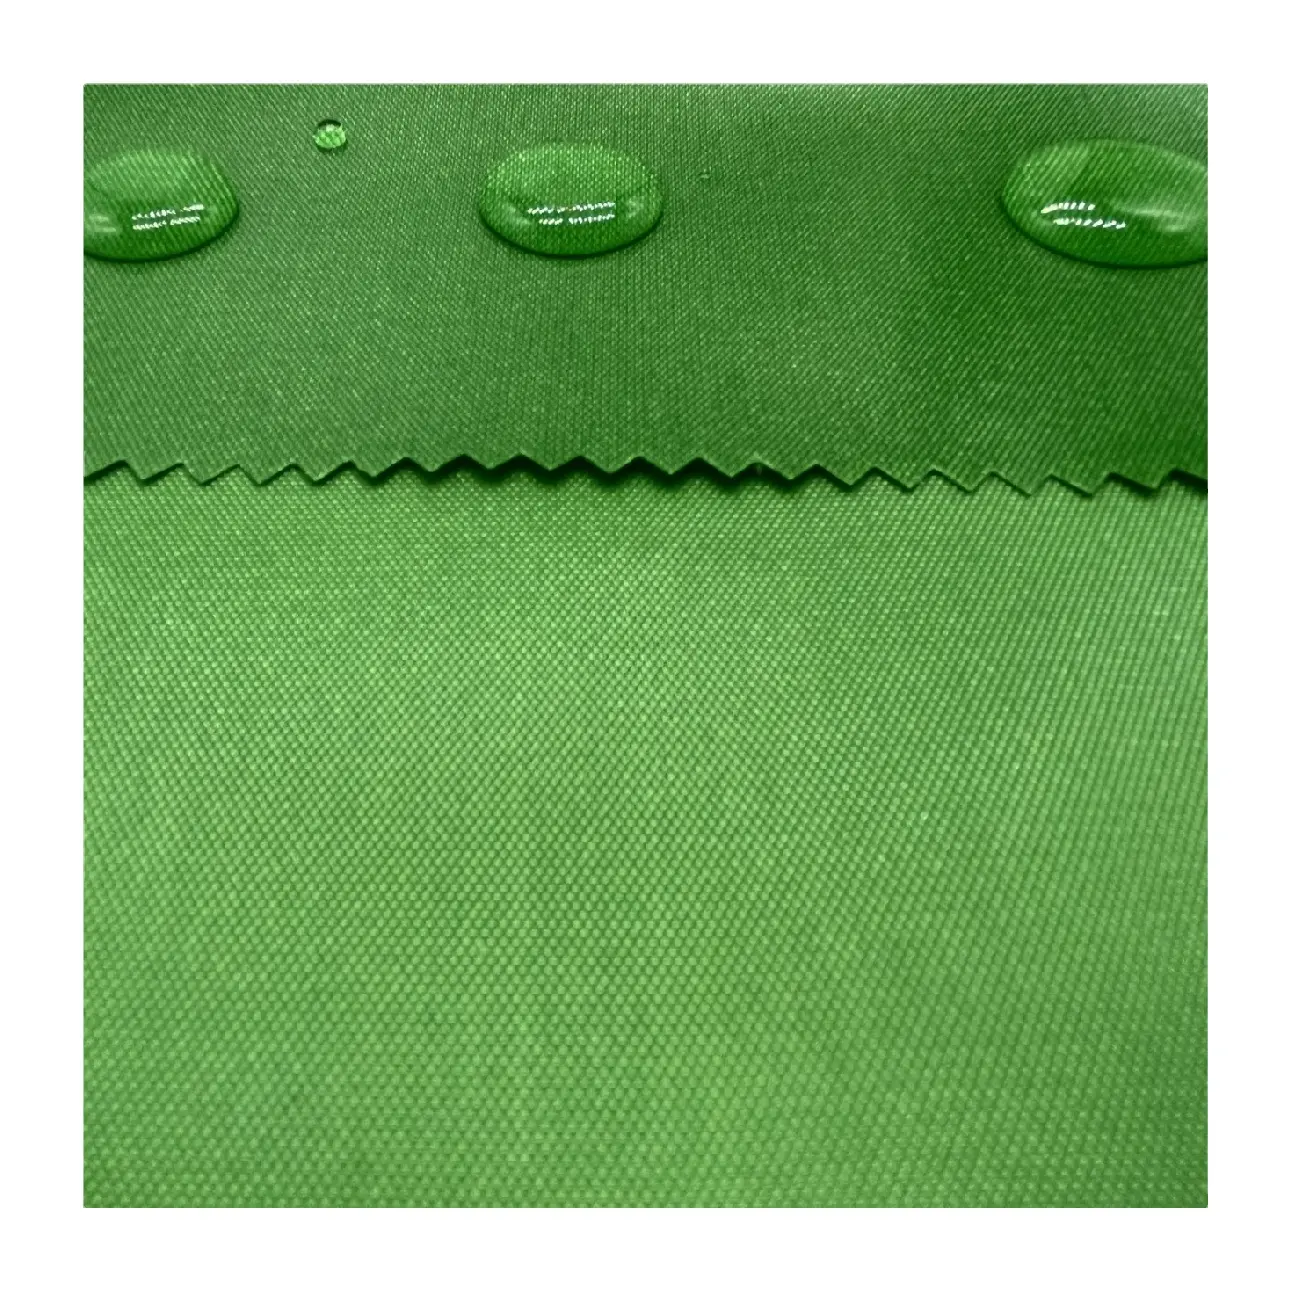 200D TPU beschichtetes Oxford-Gewebe für Taschen zelte Gepäcks chuhe Kfz-Verkleidung